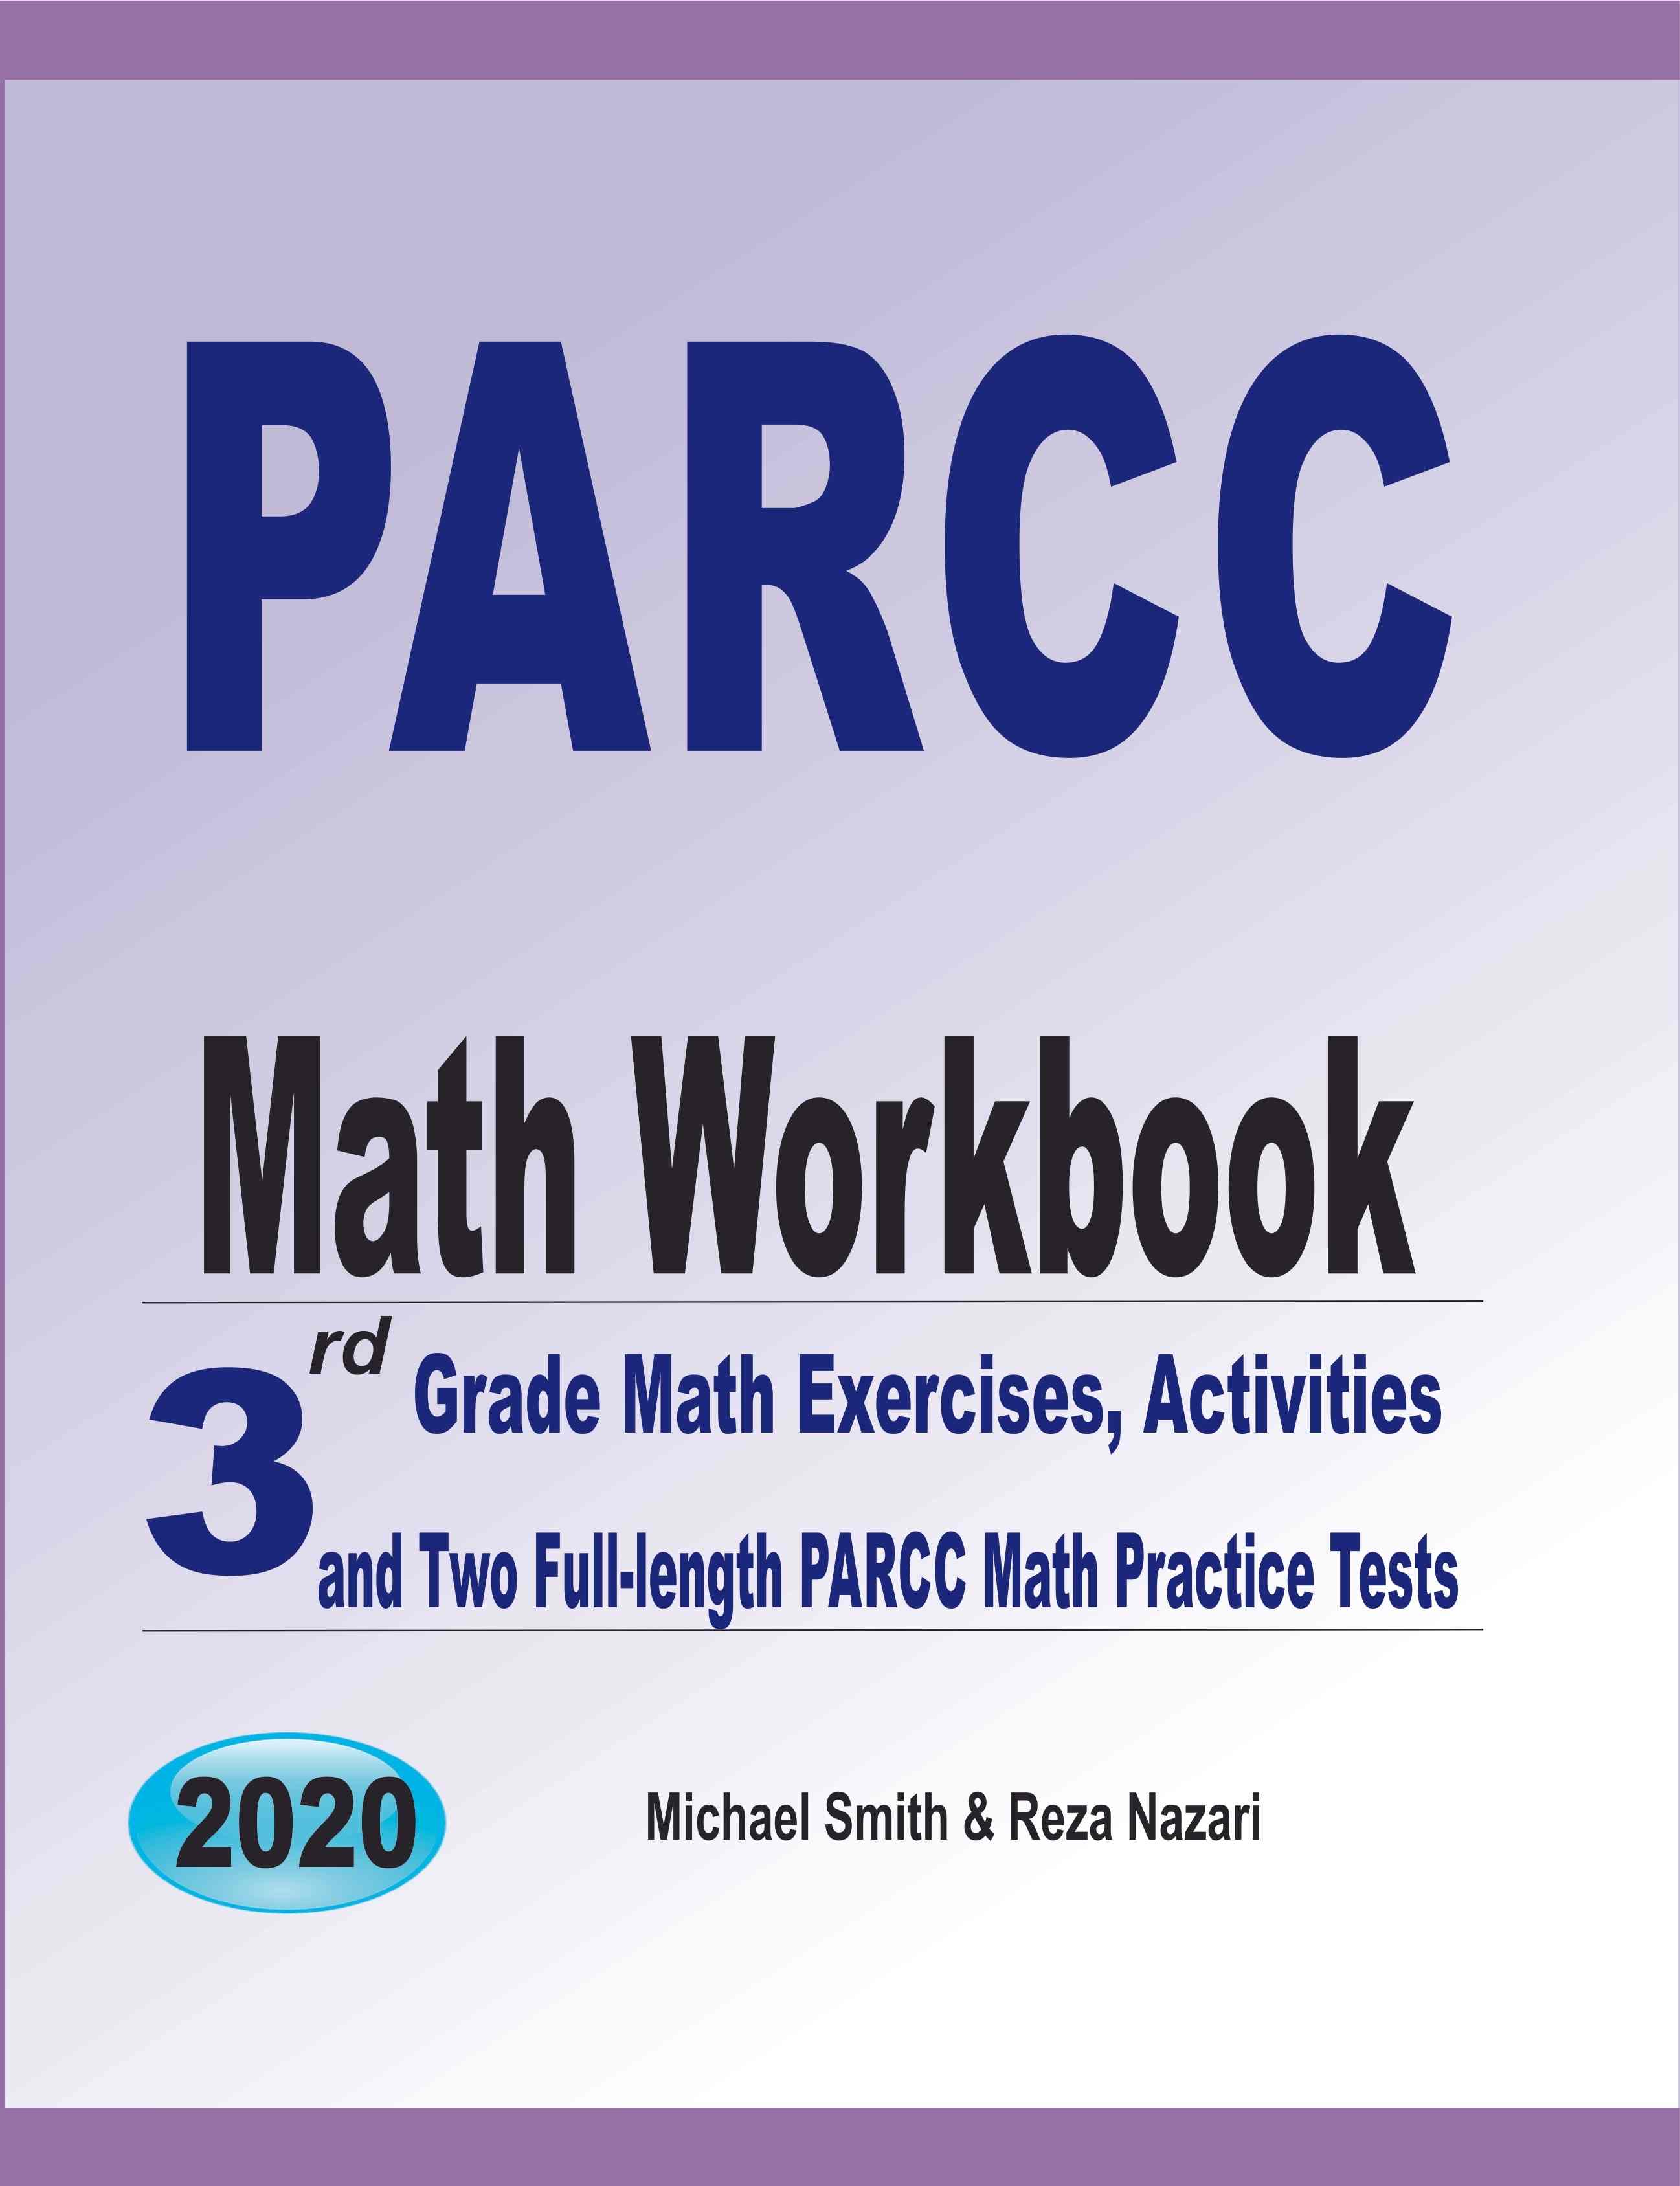 parcc-math-workbook-3rd-grade-math-exercises-activities-and-two-full-length-parcc-math